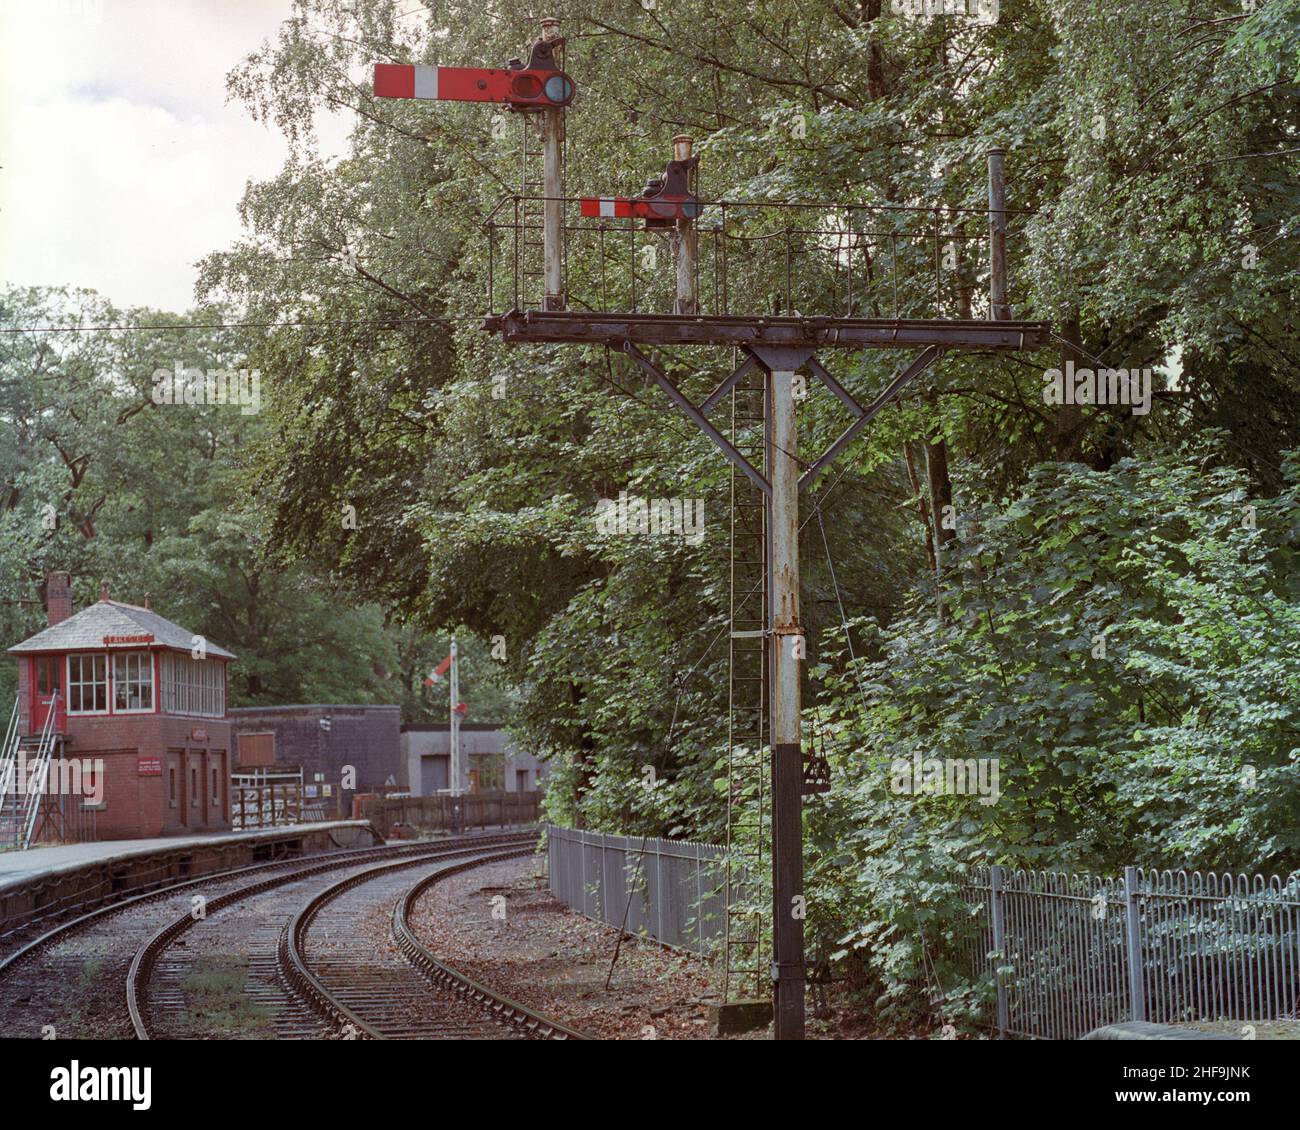 Lakeside, UK - August 2021: The old semaphore signal at Lakeside railway station. Stock Photo